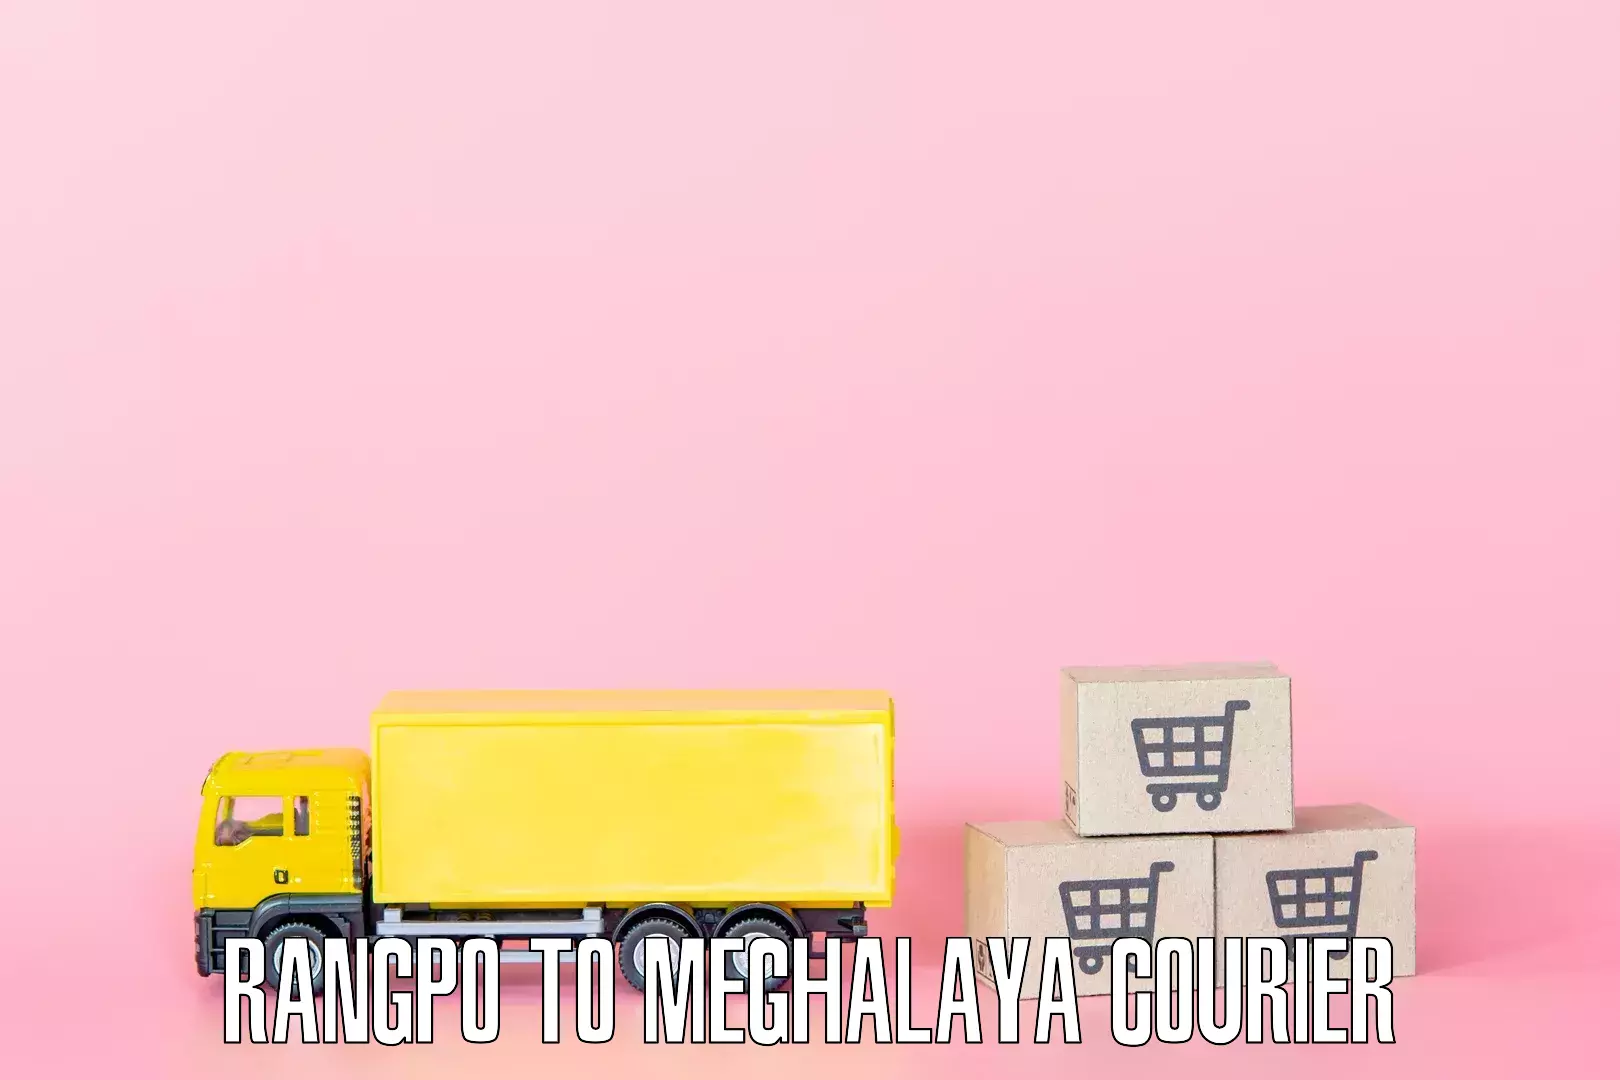 Home goods moving company Rangpo to Meghalaya